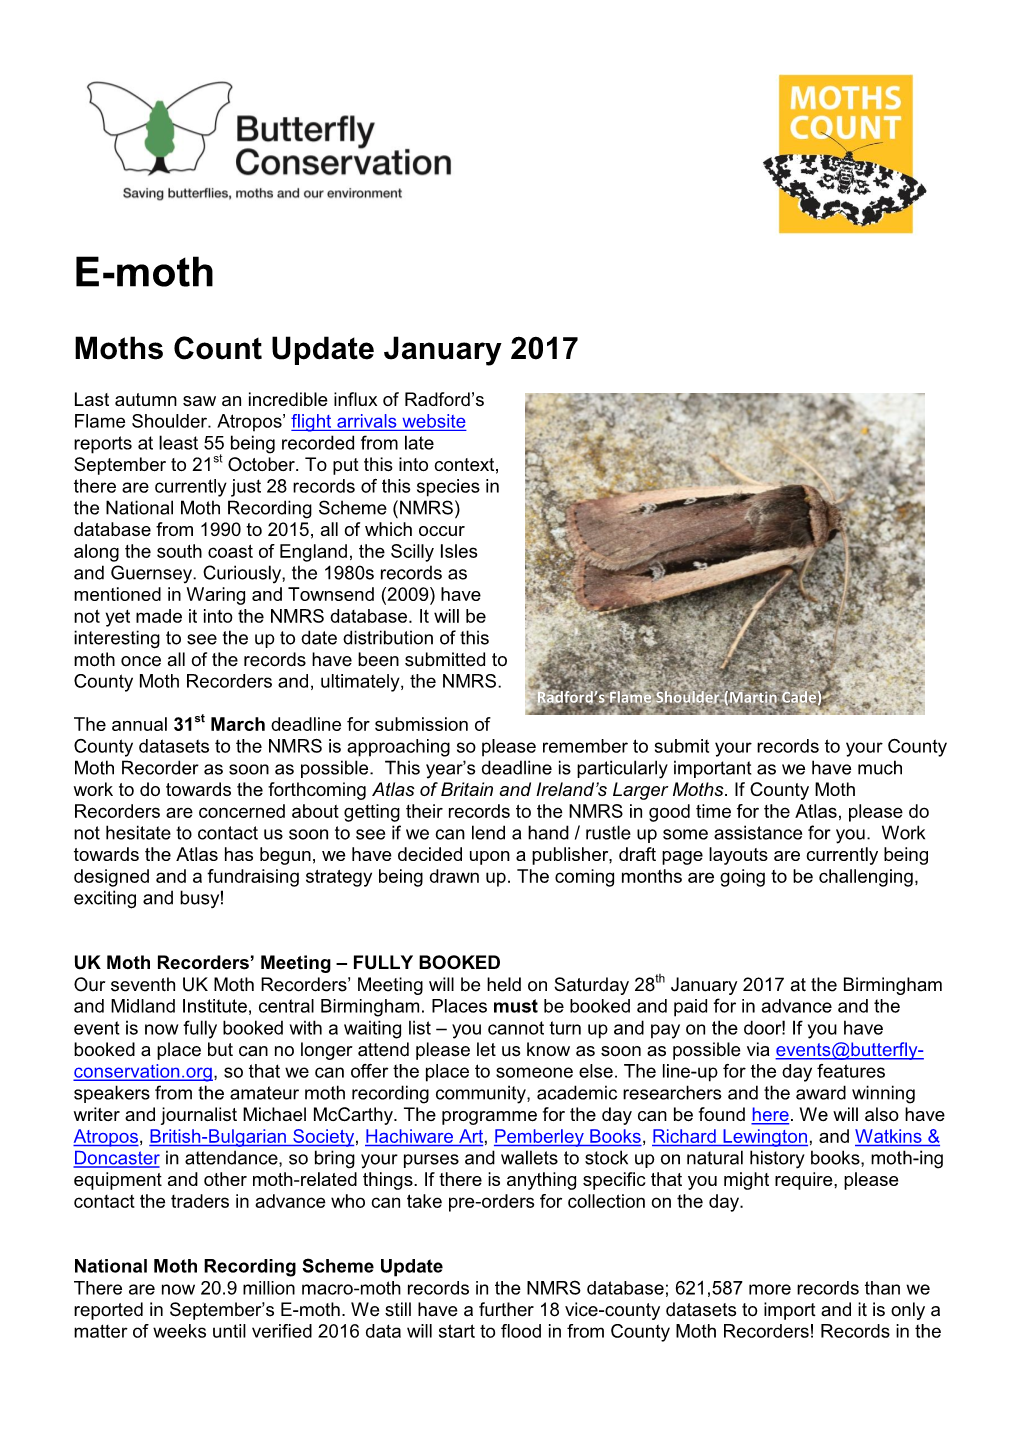 E-Moth January 2017